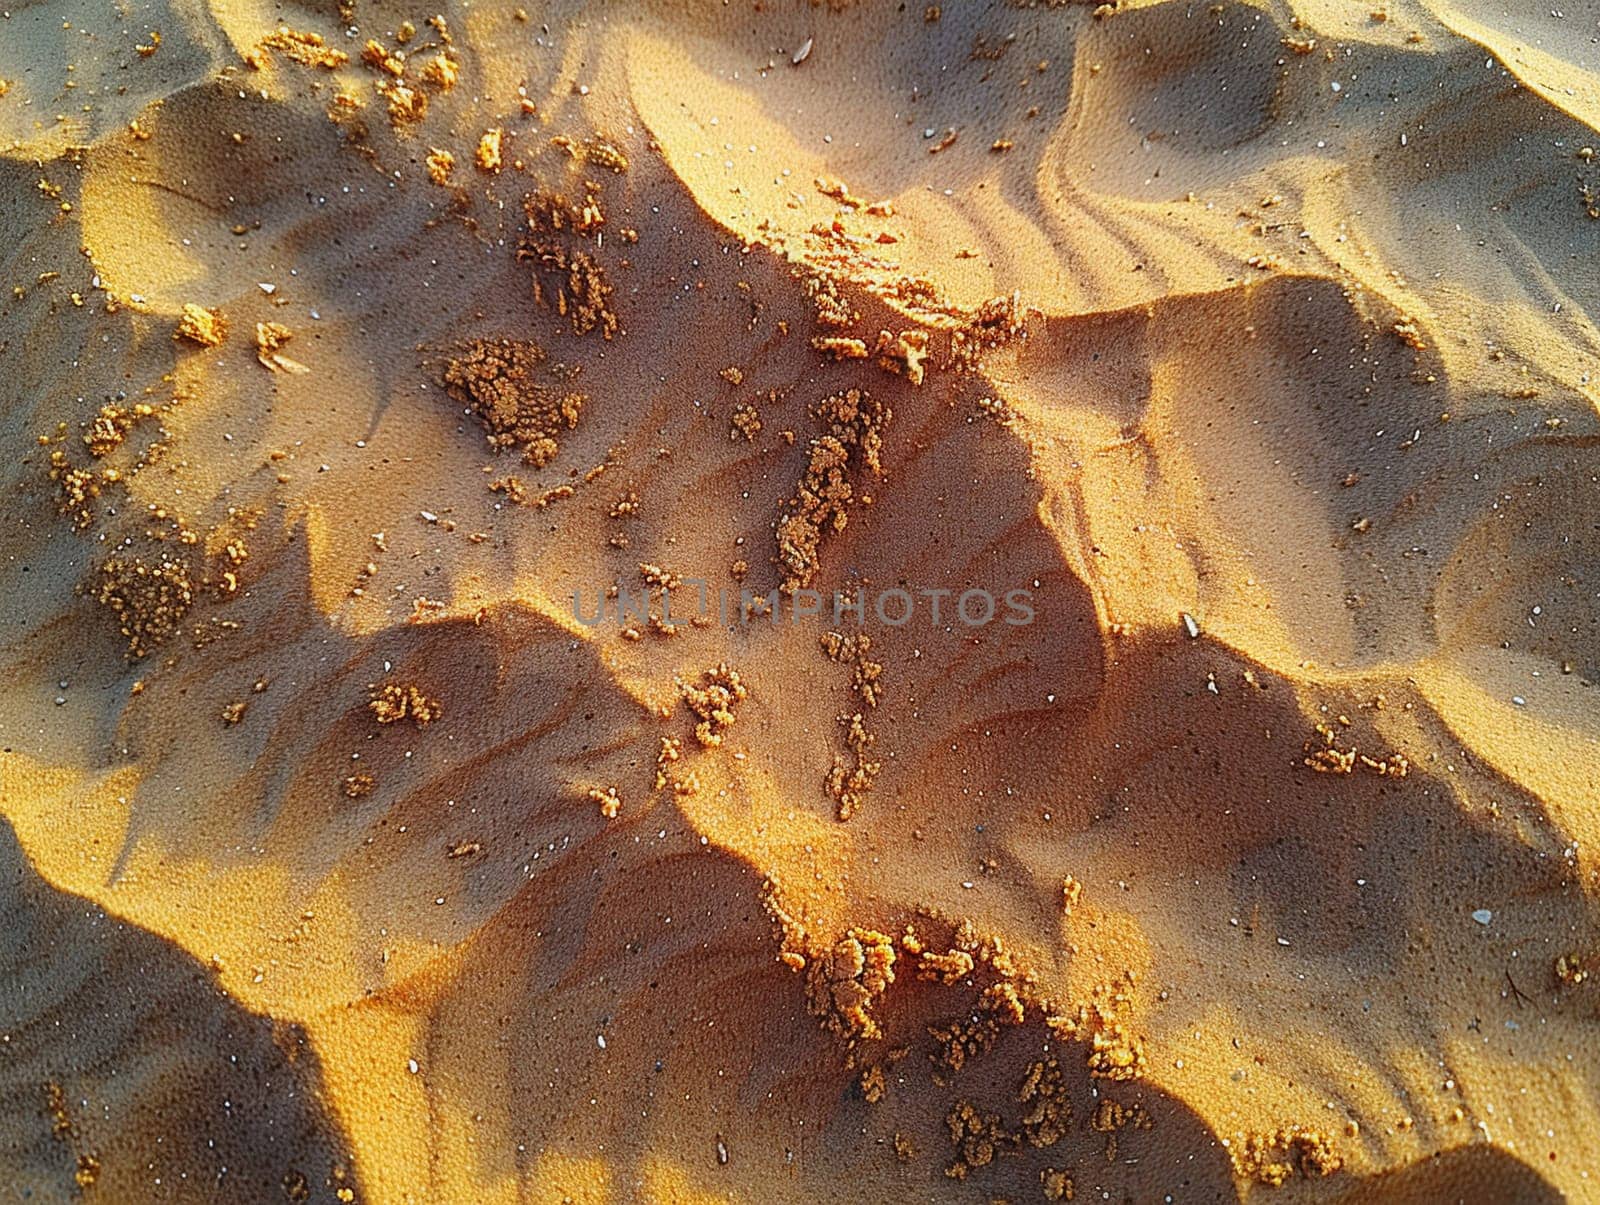 Warm desert sand patterns at sunset by Benzoix